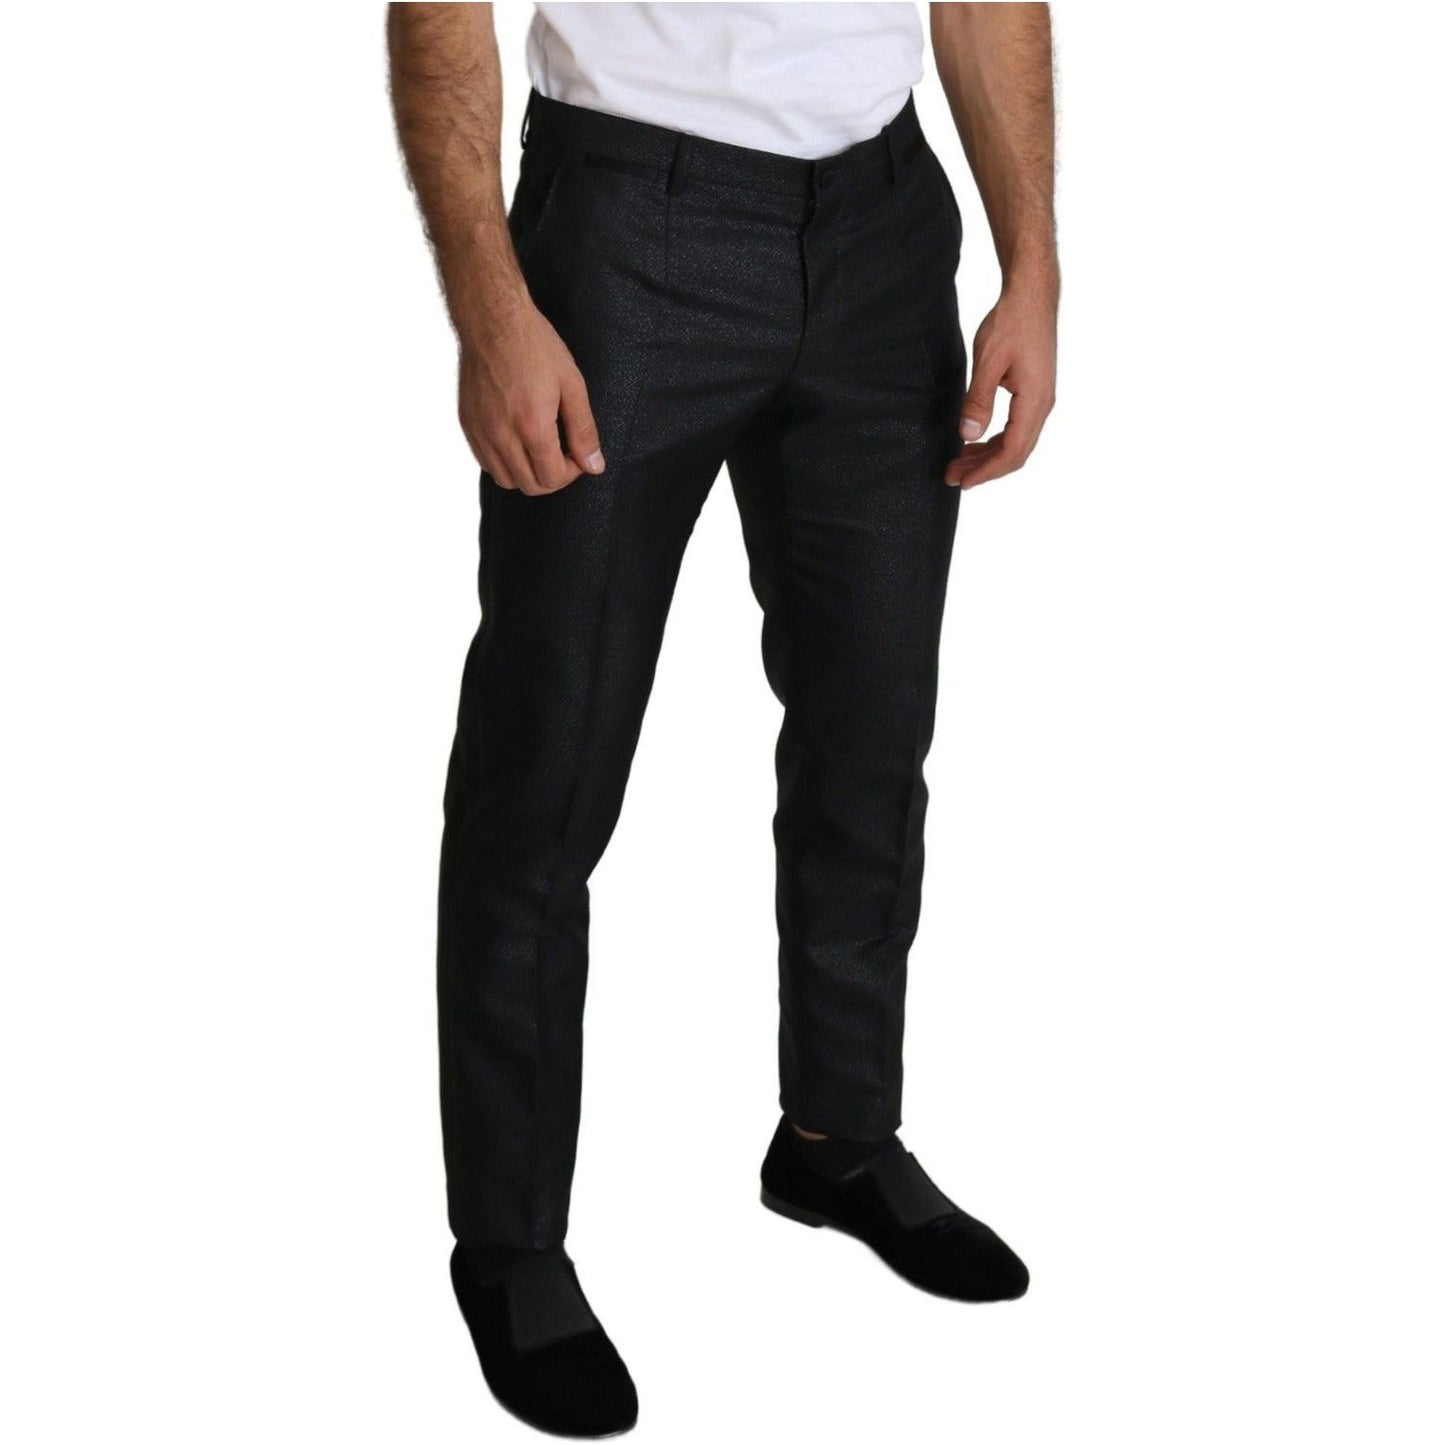 Dolce & Gabbana Elegant Metallic Black Dress Pants Jeans & Pants black-metallic-skinny-trouser-dress IMG_2241-c9e88a0d-be7.jpg